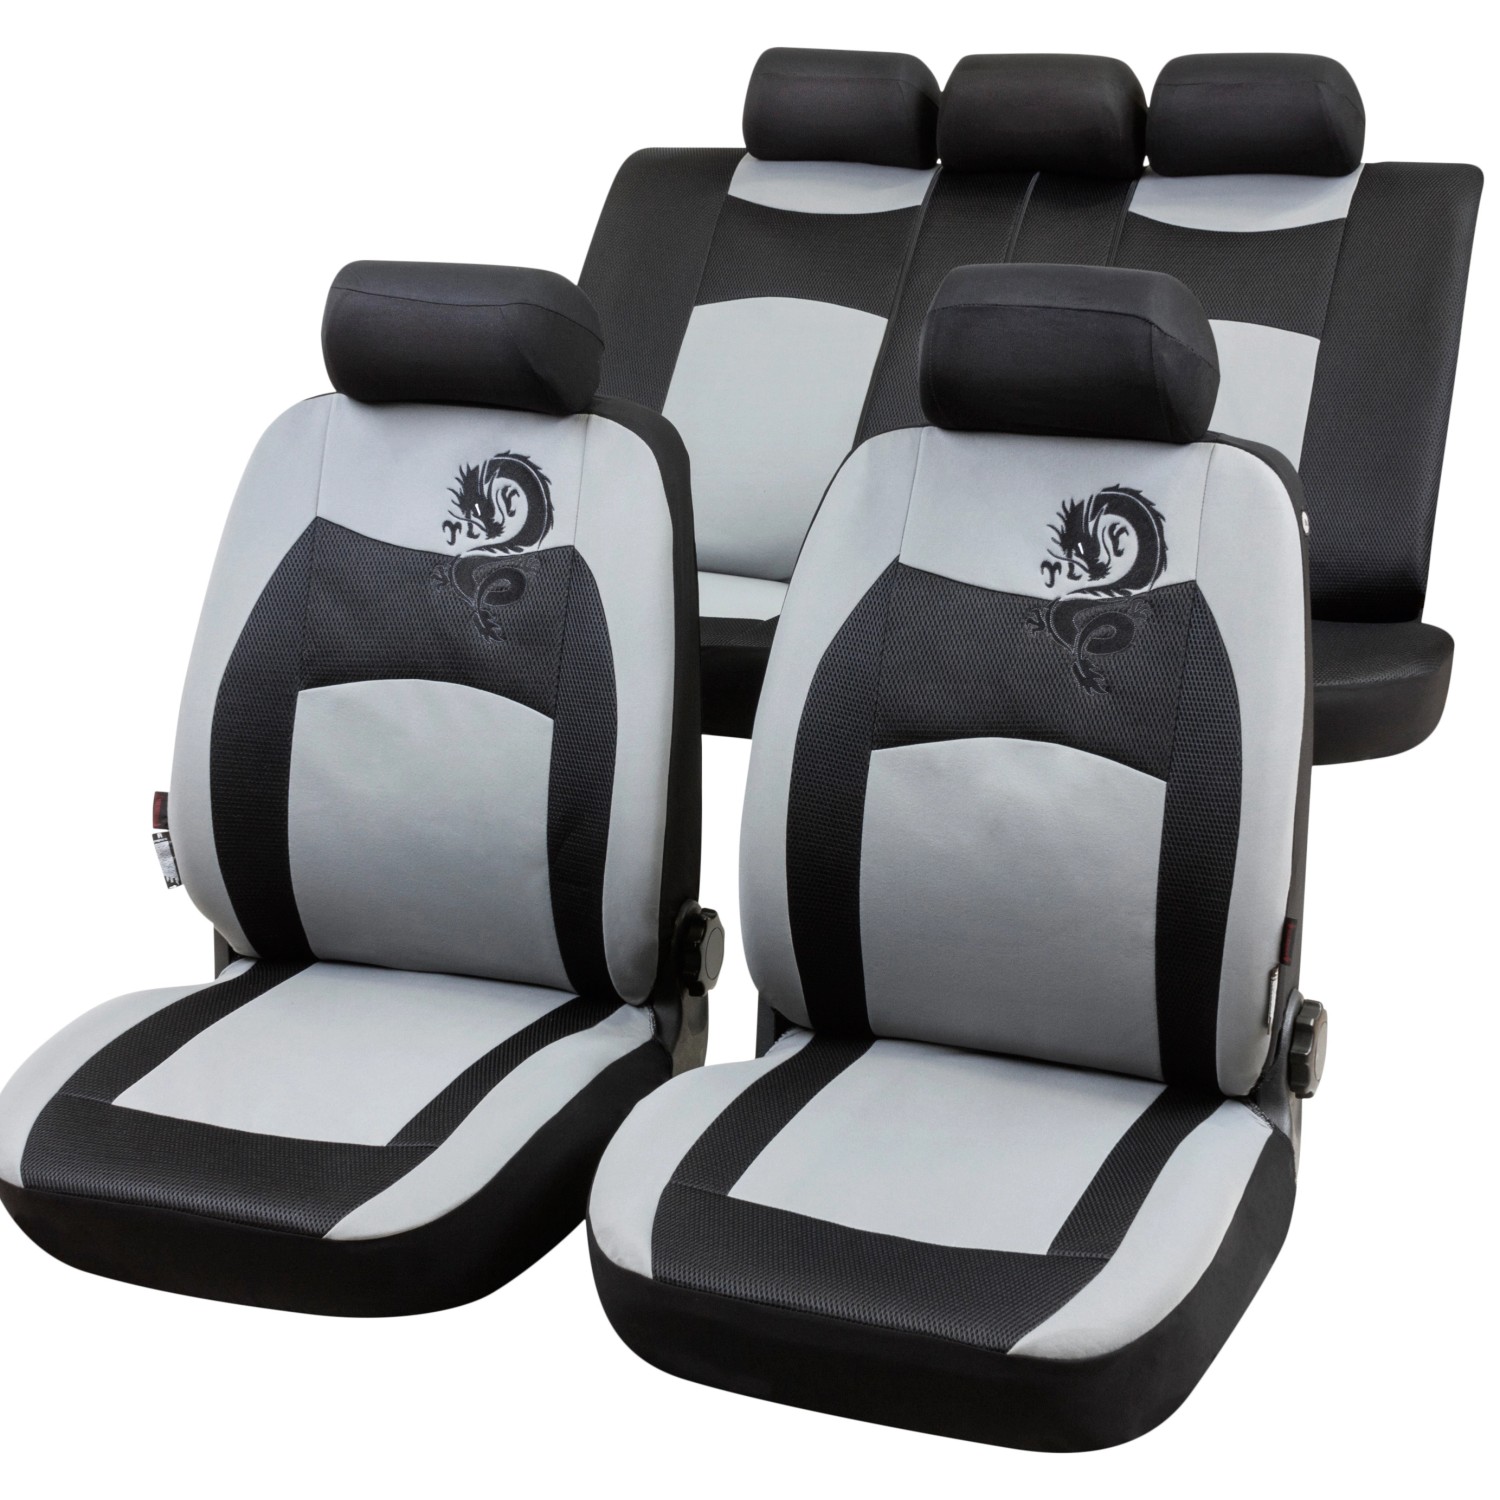 OBI Sitzbezug Komplett-Set Dragon Schwarz-Grau kaufen bei OBI